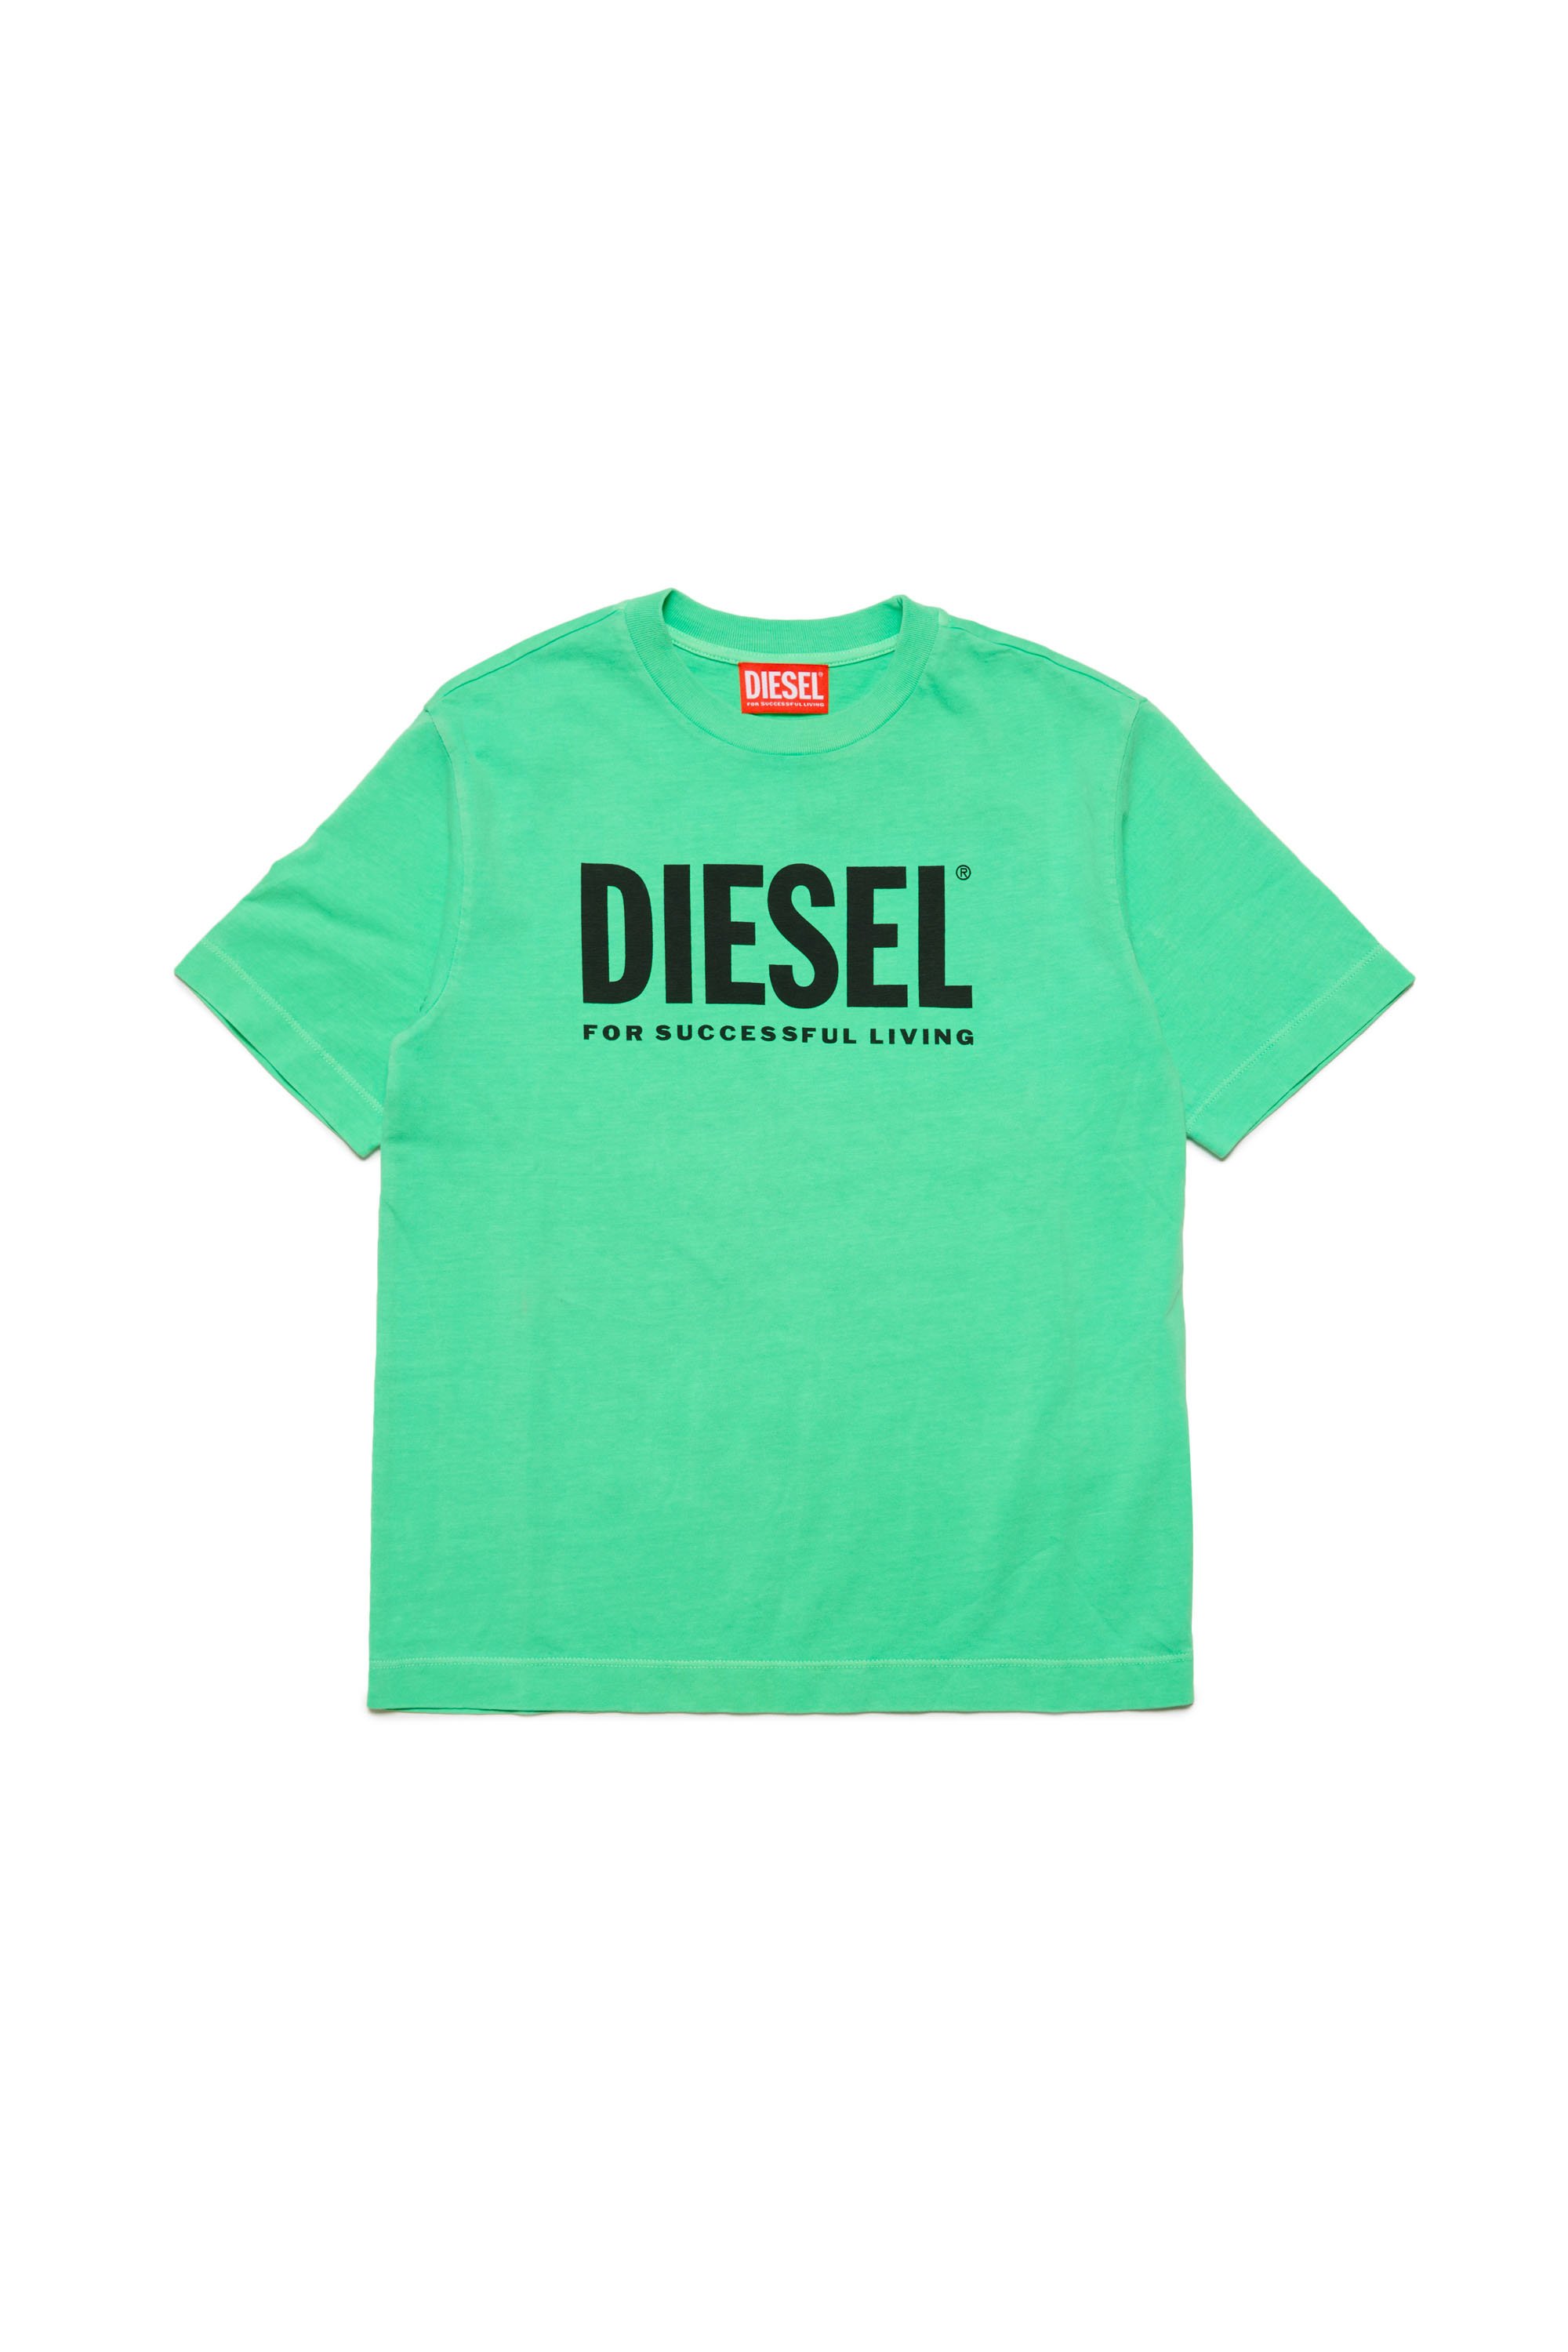 Diesel - TNUCI OVER, Mixte T-shirt avec logo Diesel For Successful Living in Vert - Image 1